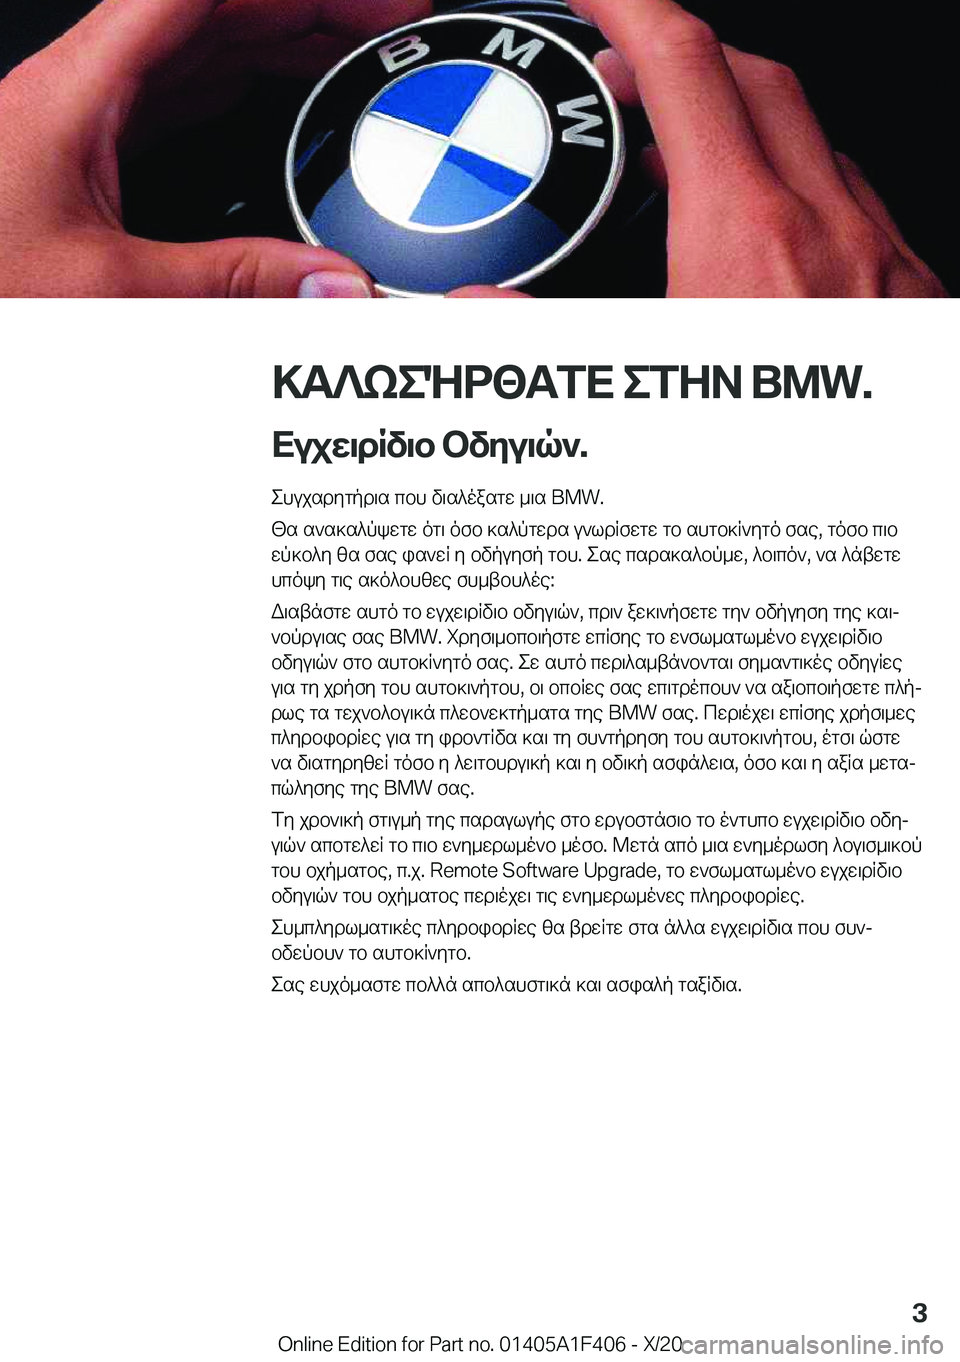 BMW X5 2021  ΟΔΗΓΌΣ ΧΡΉΣΗΣ (in Greek) >T?keNd<TfX�efZA��B�M�W�.
Xujw\dRv\b�bvyu\q`�. ehujsdygpd\s�cbh�v\s^oasgw�_\s��B�M�W�.
[s�s`s]s^pkwgw�og\�ofb�